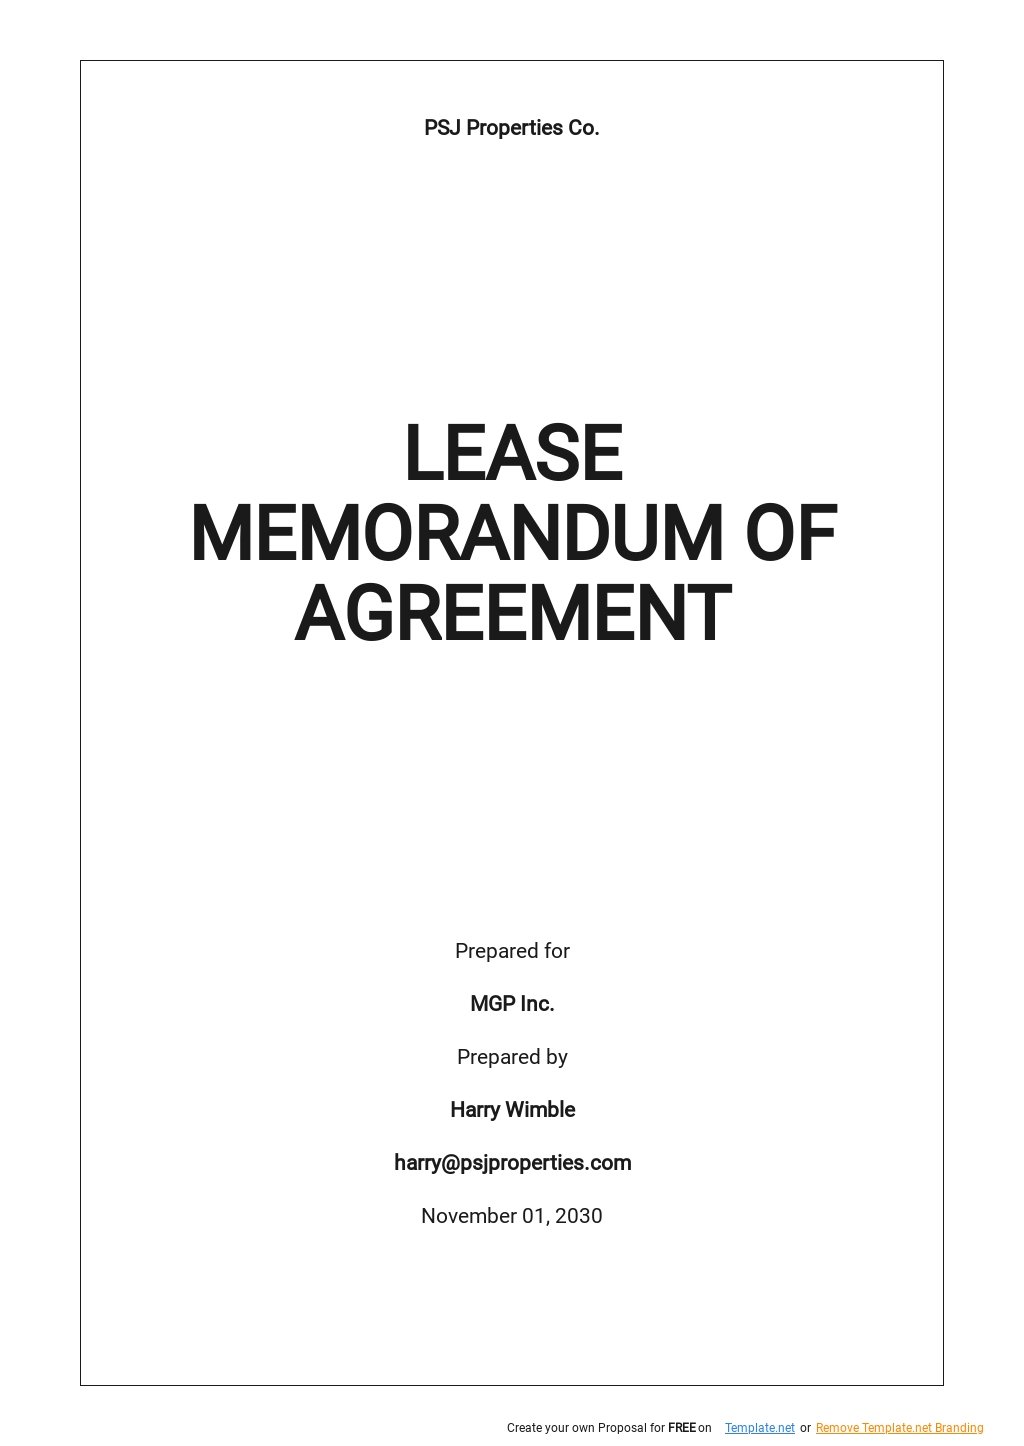 Lease Memorandum of Agreement Template.jpe